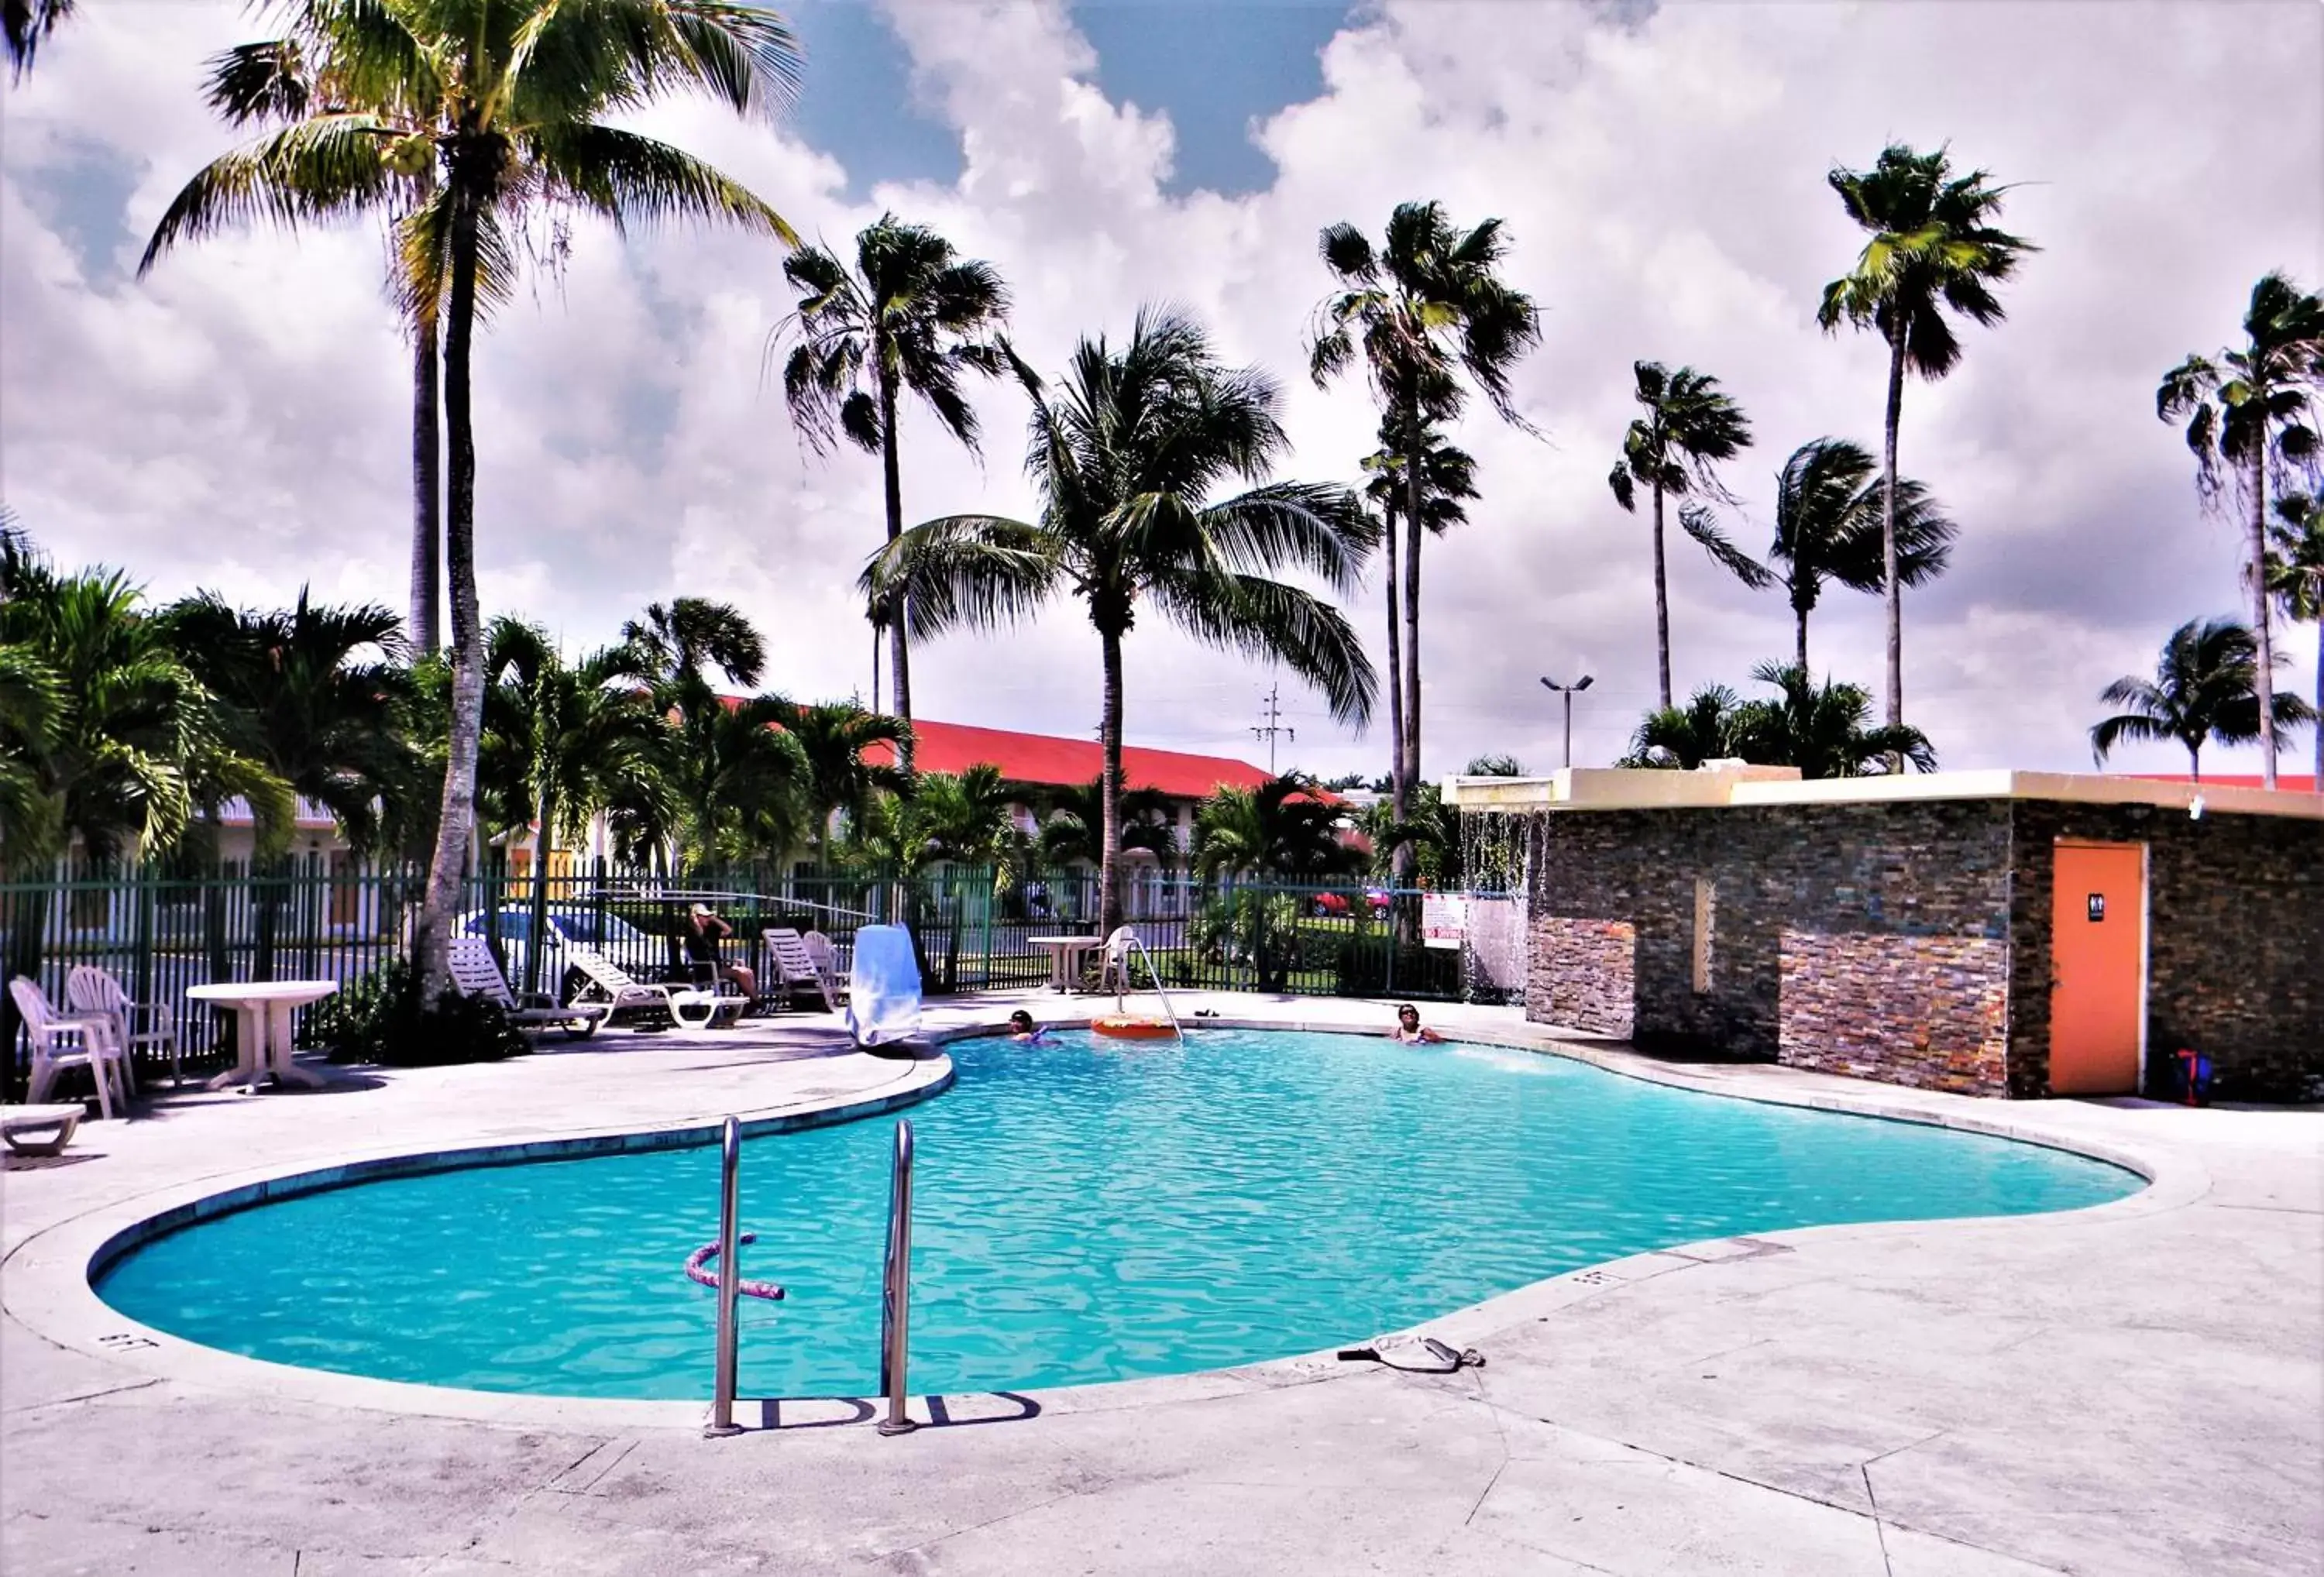 Swimming Pool in Fairway Inn Florida City Homestead Everglades